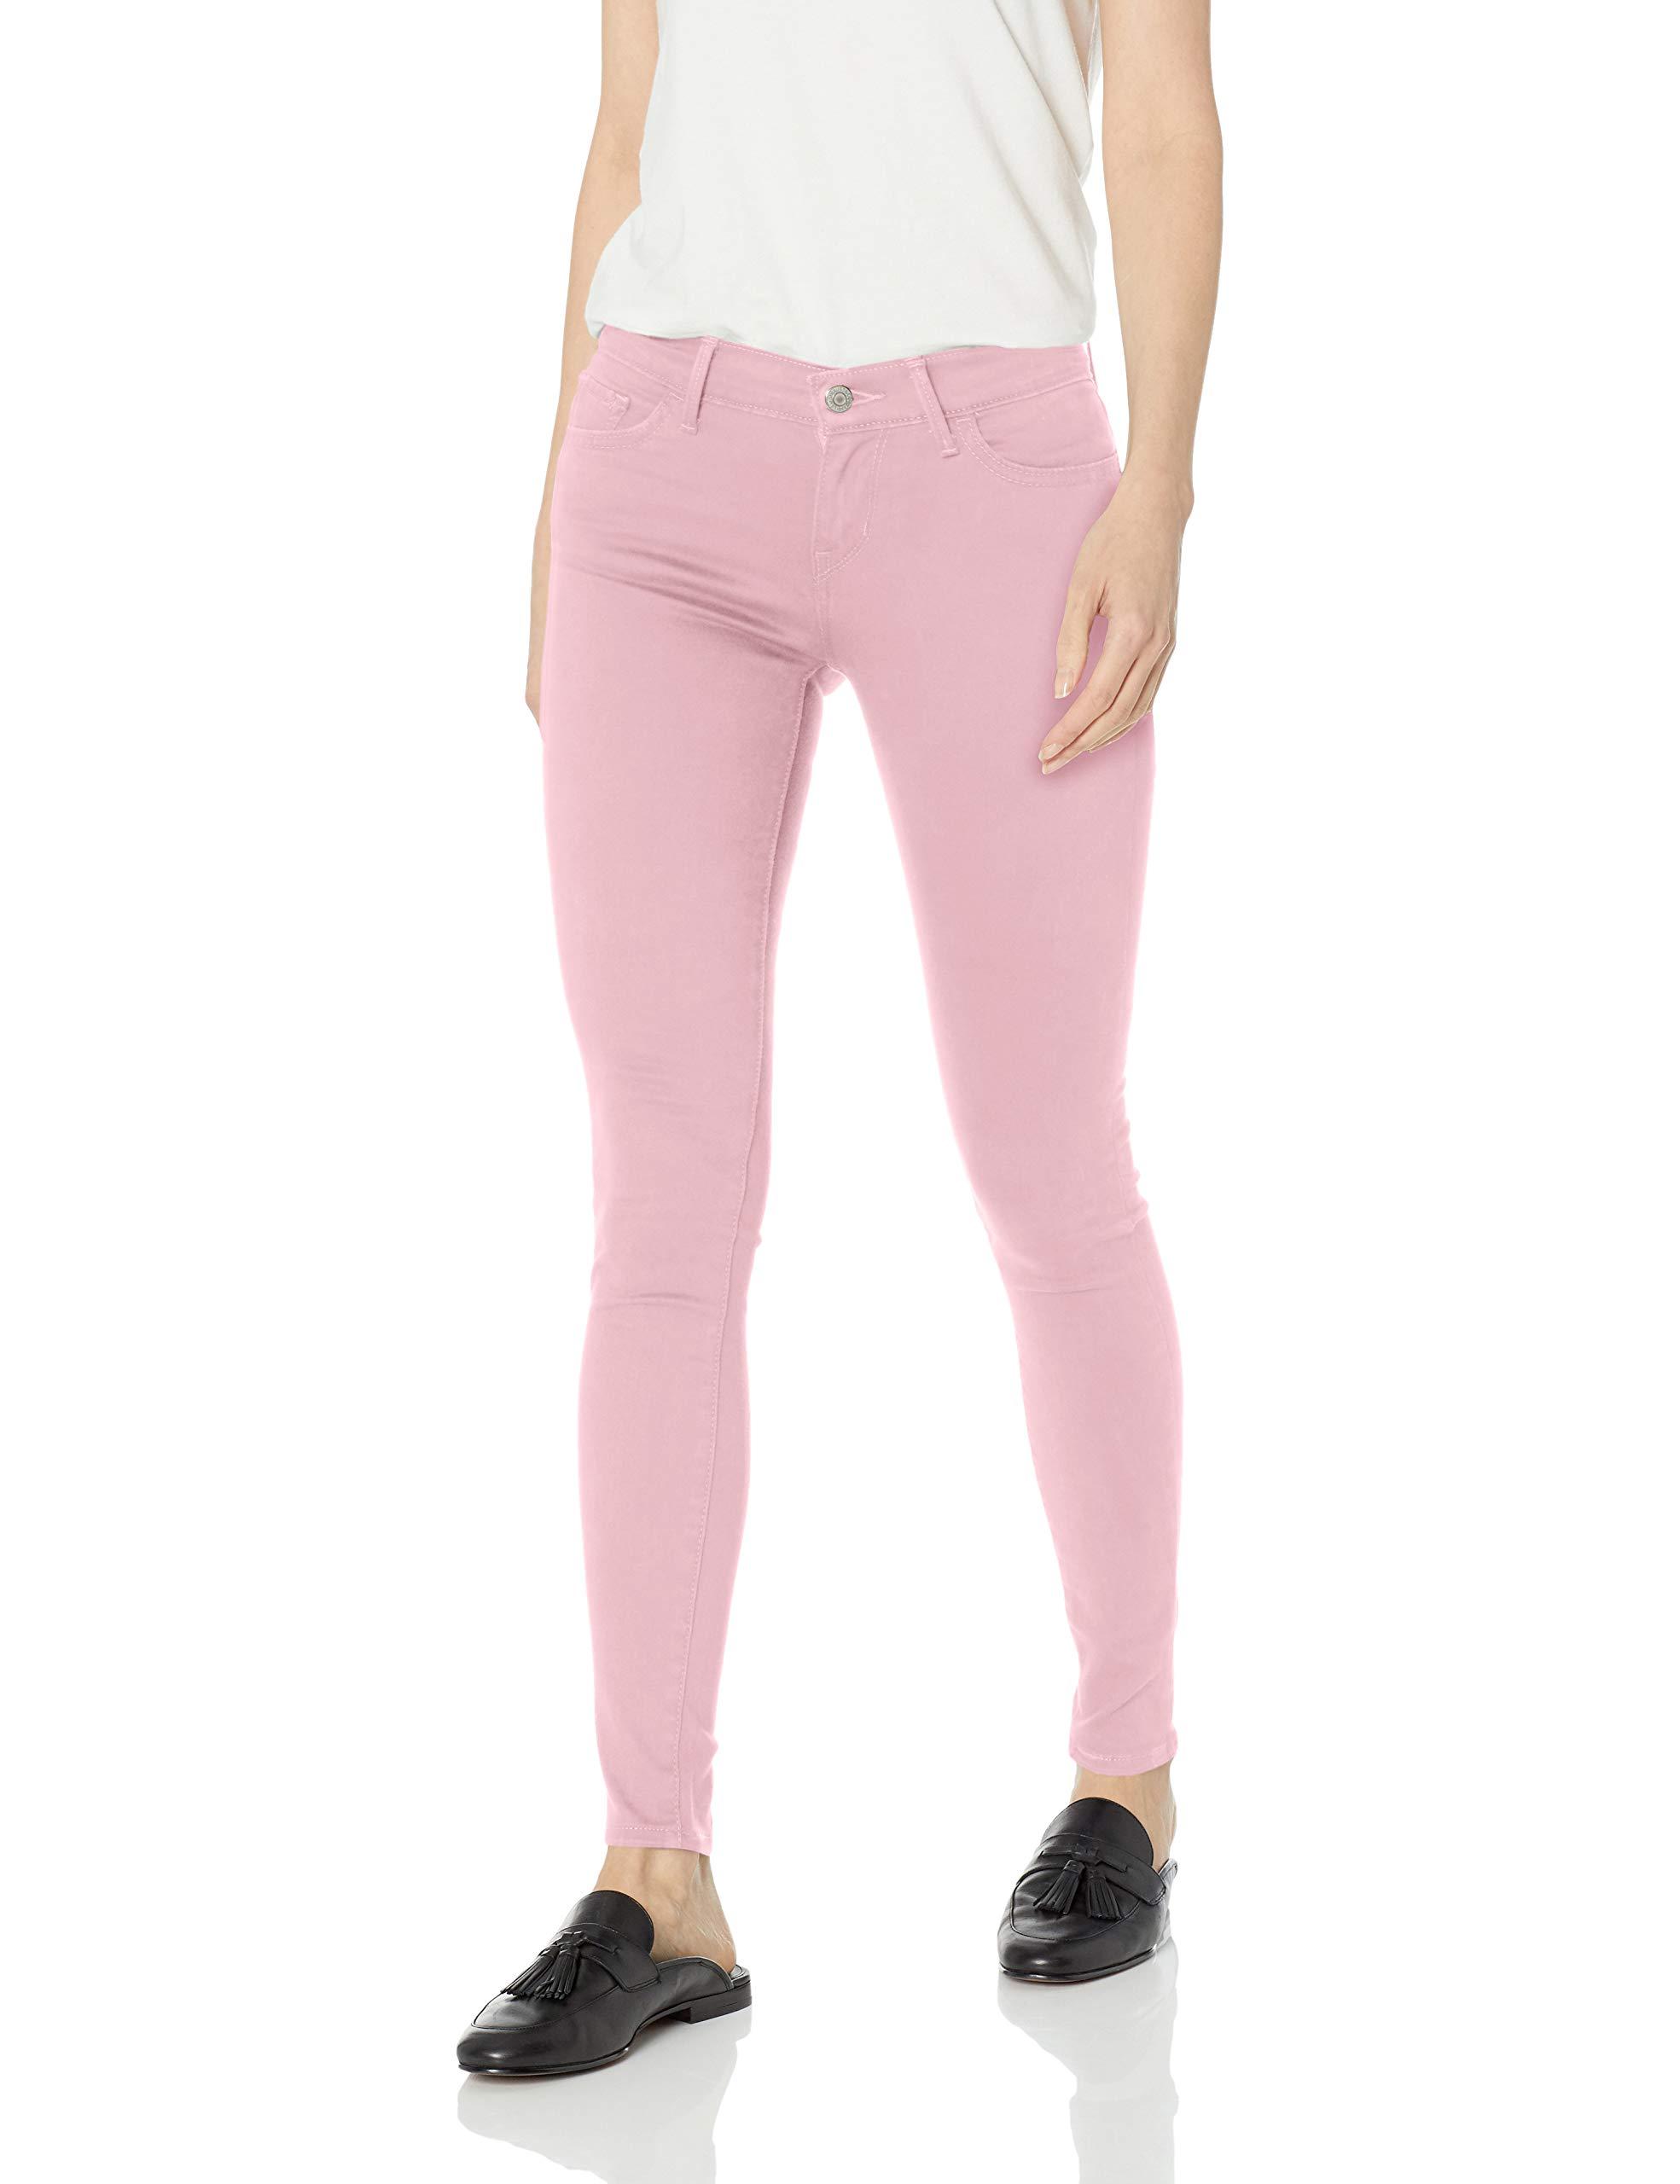 Levi's Denim 710 Super Skinny Jeans in Pink - Lyst